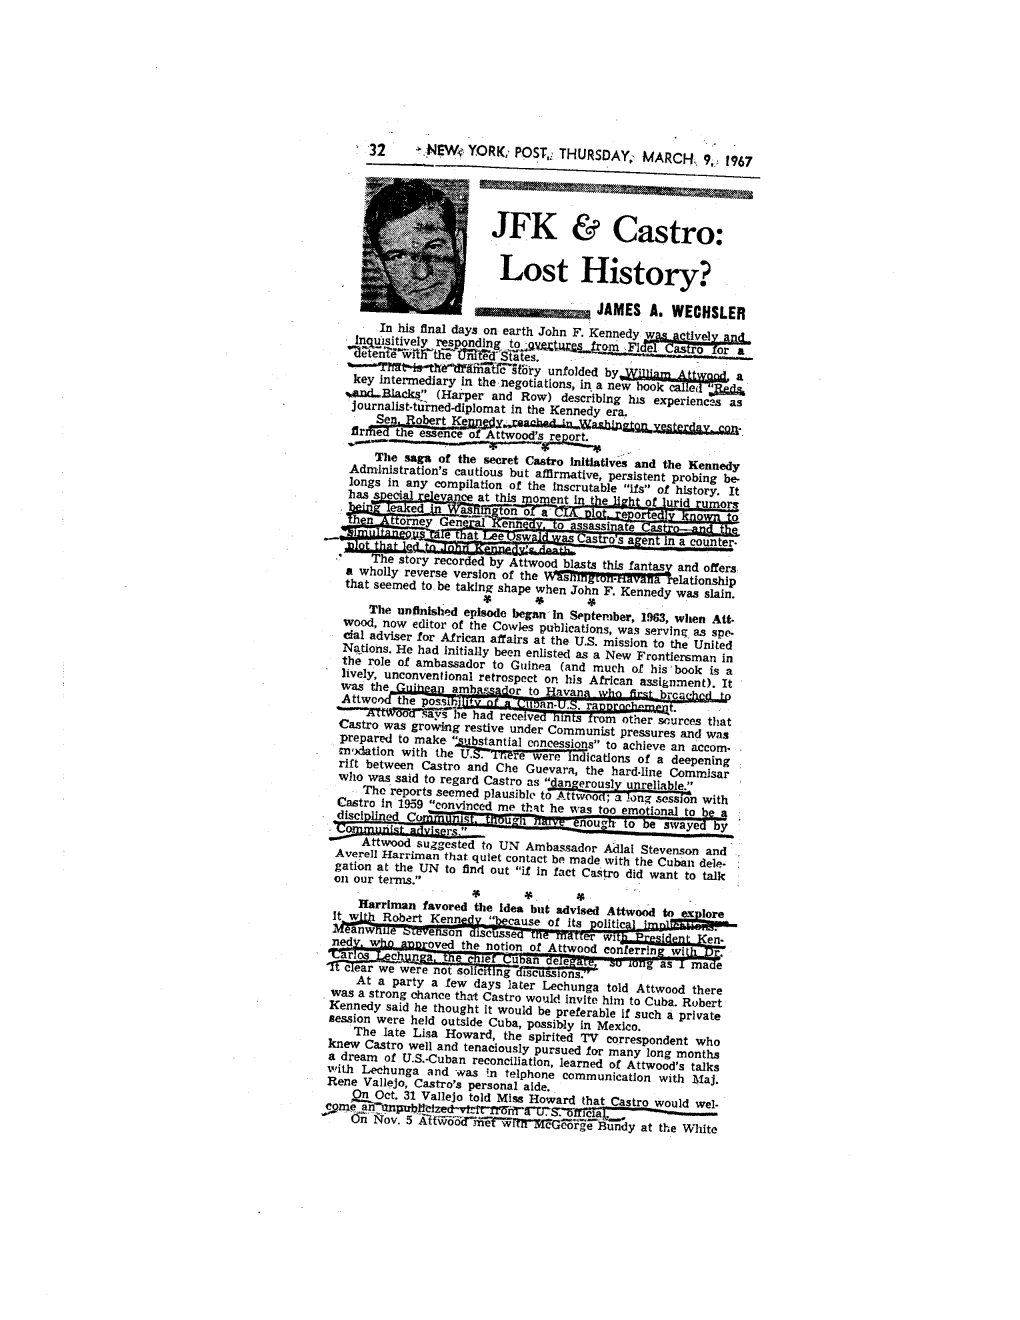 JFK & Castro: Lost History?